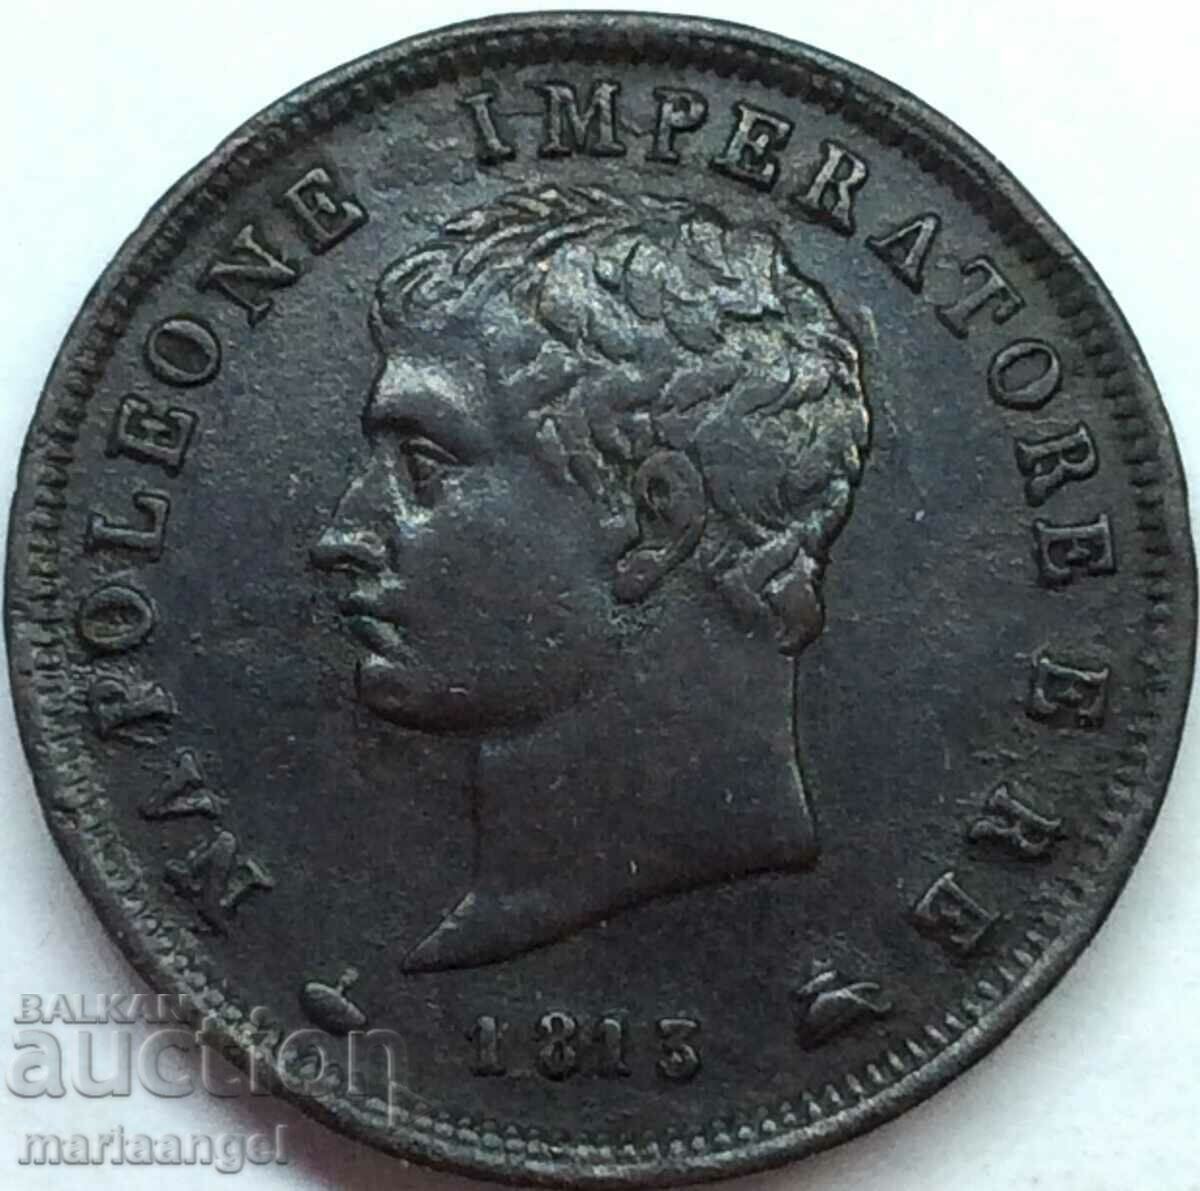 Napoleon 1 soldo 1813 Ιταλία 10 g M - Μιλάνο χάλκινο